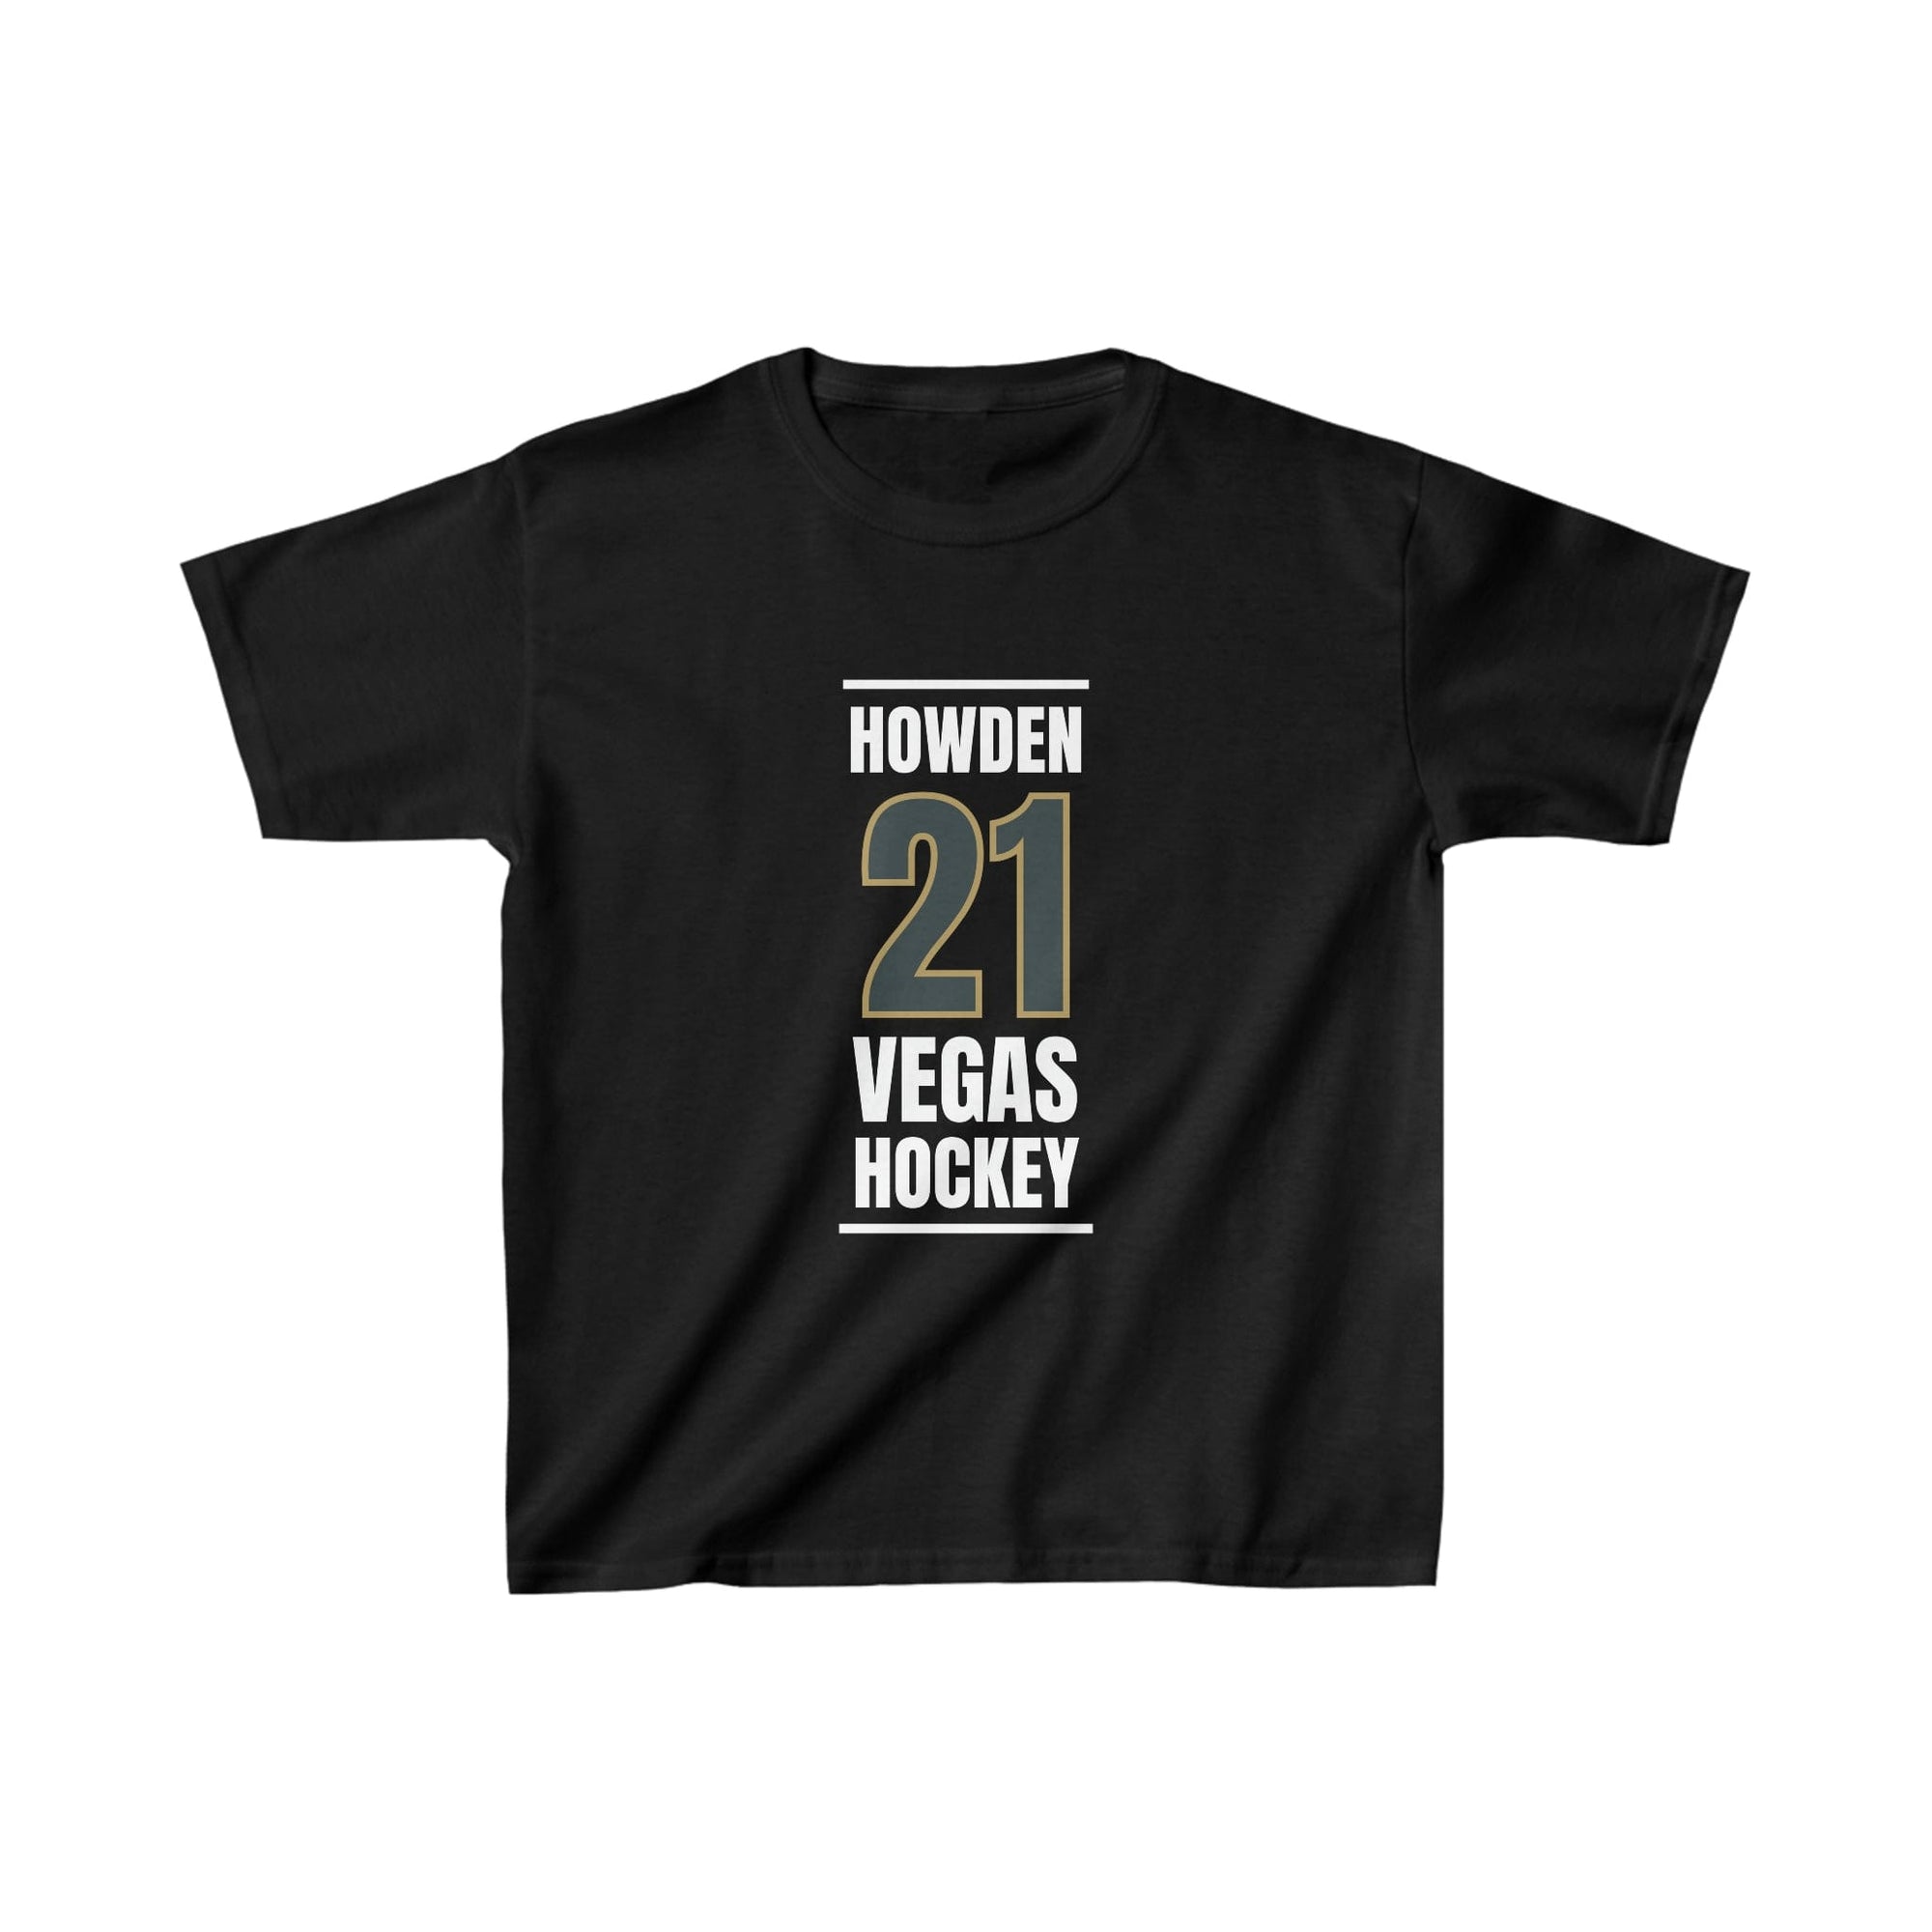 Kids clothes Howden 21 Vegas Hockey Steel Gray Vertical Design Kids Tee